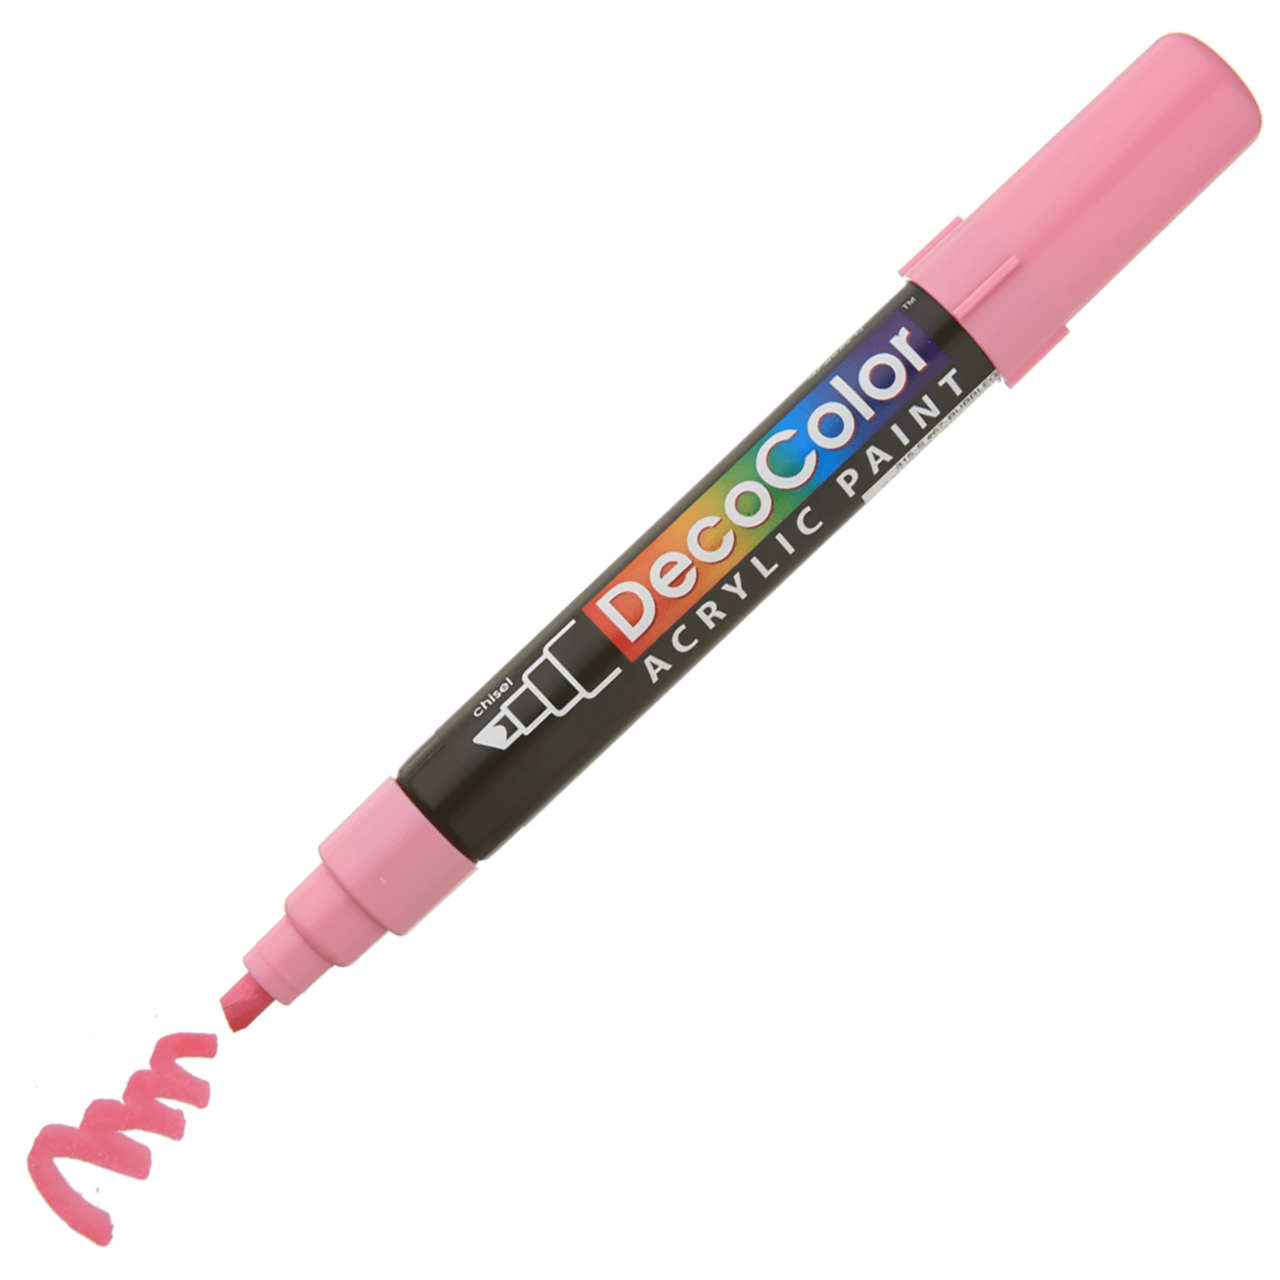 Marvy Uchida Decocolor acrylic paint markers Bright set of 4 pens